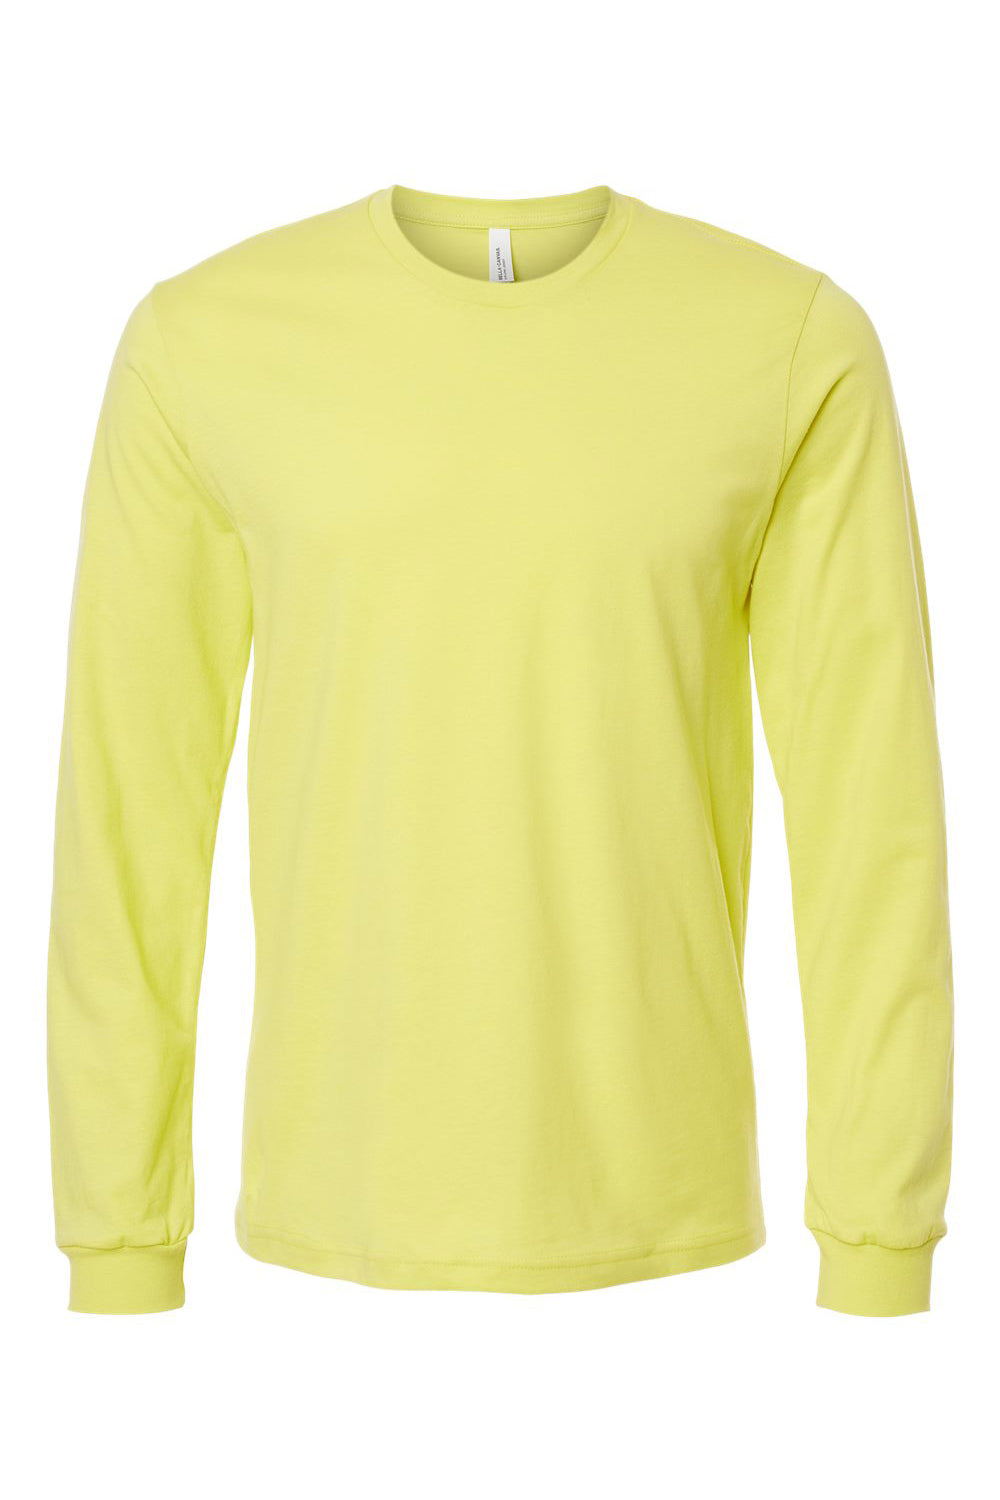 Bella + Canvas BC3501/3501 Mens Jersey Long Sleeve Crewneck T-Shirt Strobe Green Flat Front